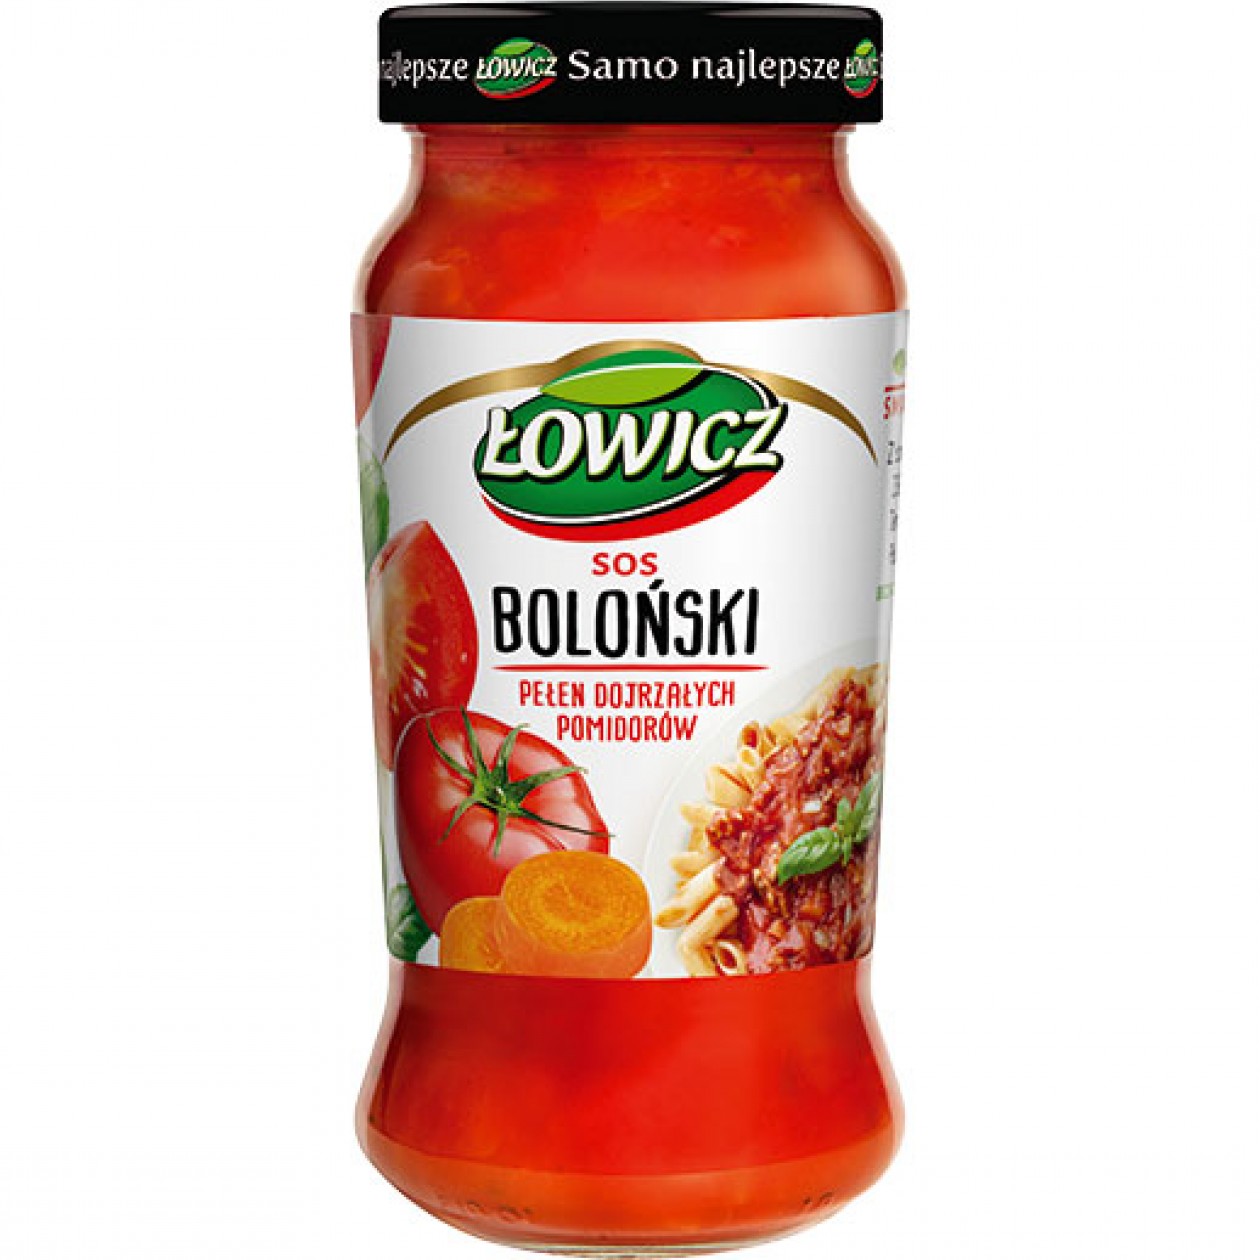 Lowicz Sauce Bolognese (Bolonski) 6x520g/500g